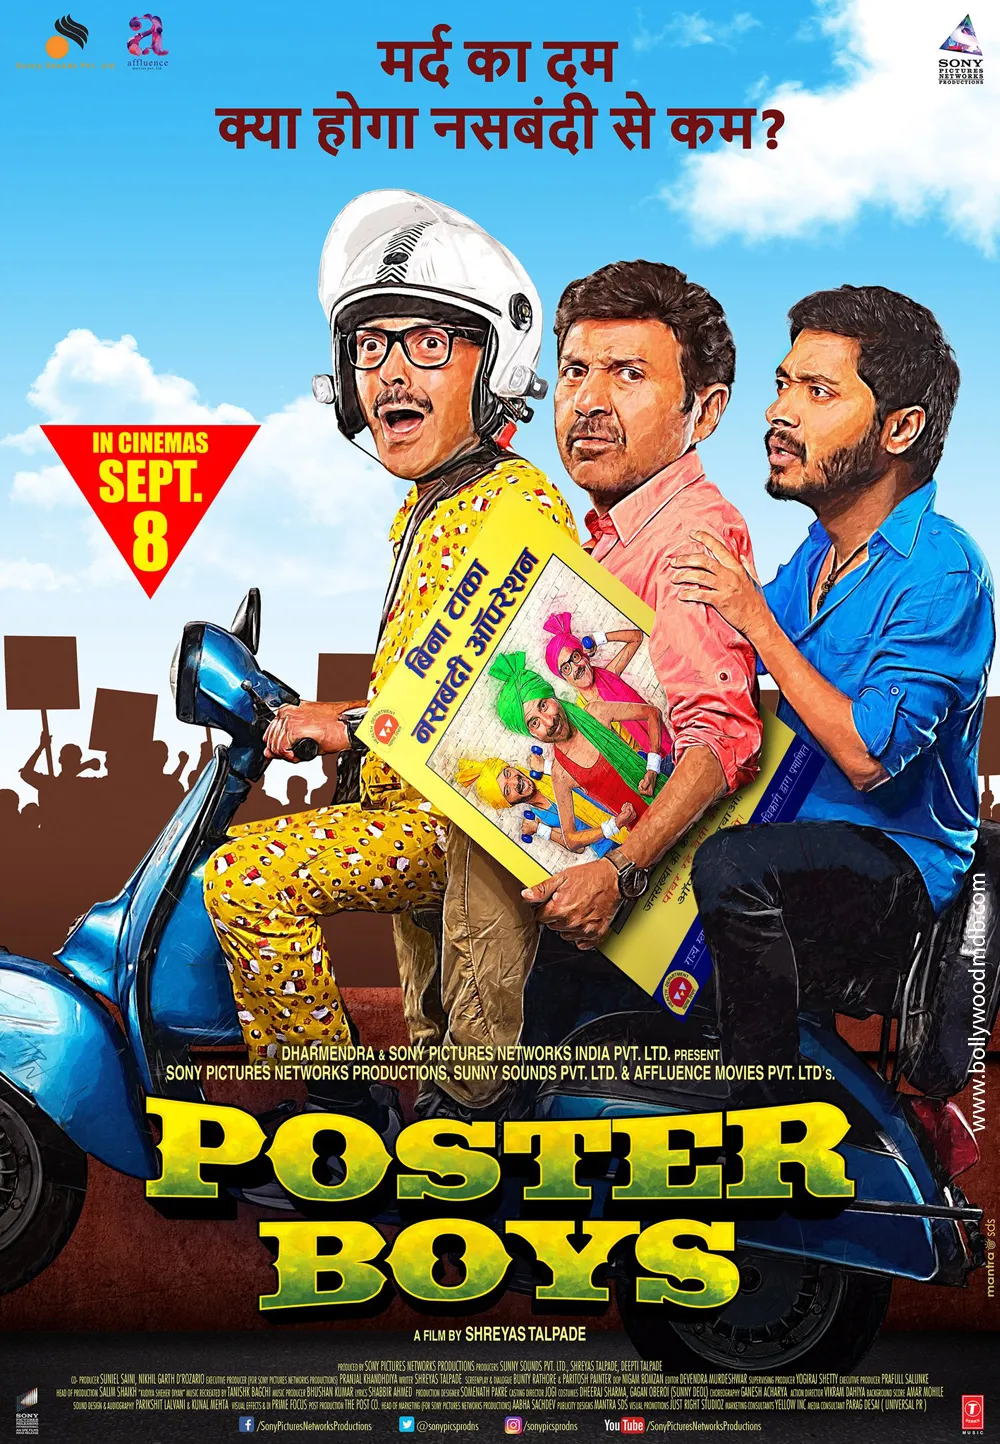 Poster Boys (2017) Hindi WEB-DL H264 AAC 1080p 720p 480p Download